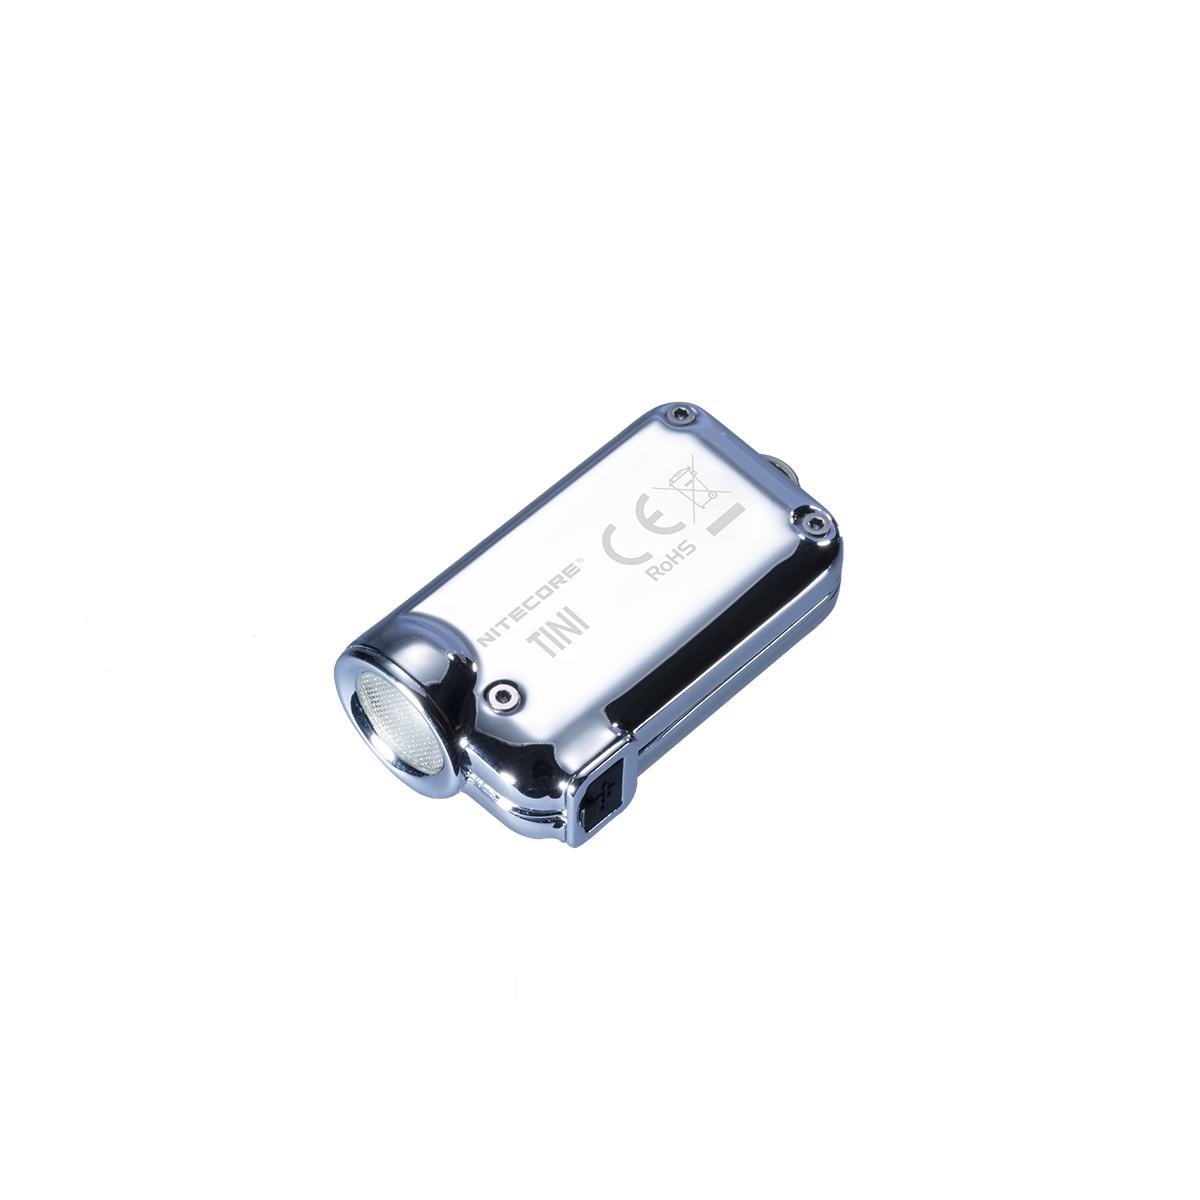 Nitecore TINI SS / TINI Cu 2x OSRAM P8 LED 500 Lumens Rechargeable Keychain USB-C EDC Light